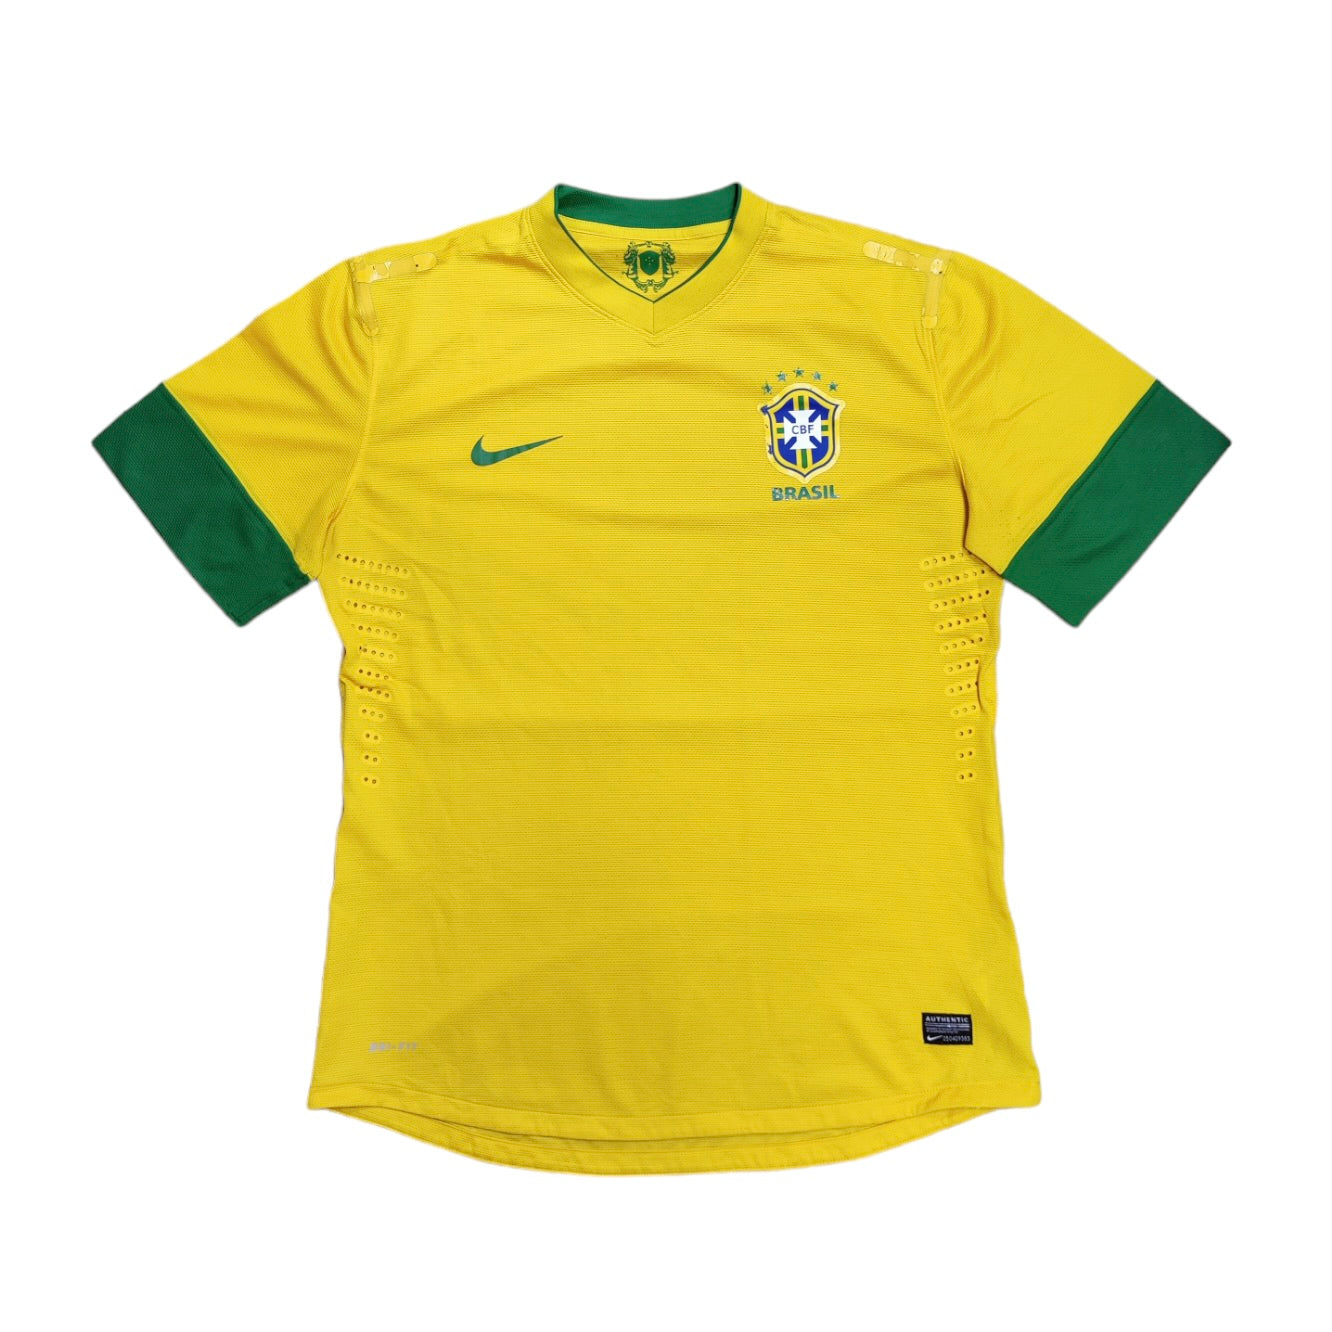 Nike Brazil 2012/2013 Home Football Jersey